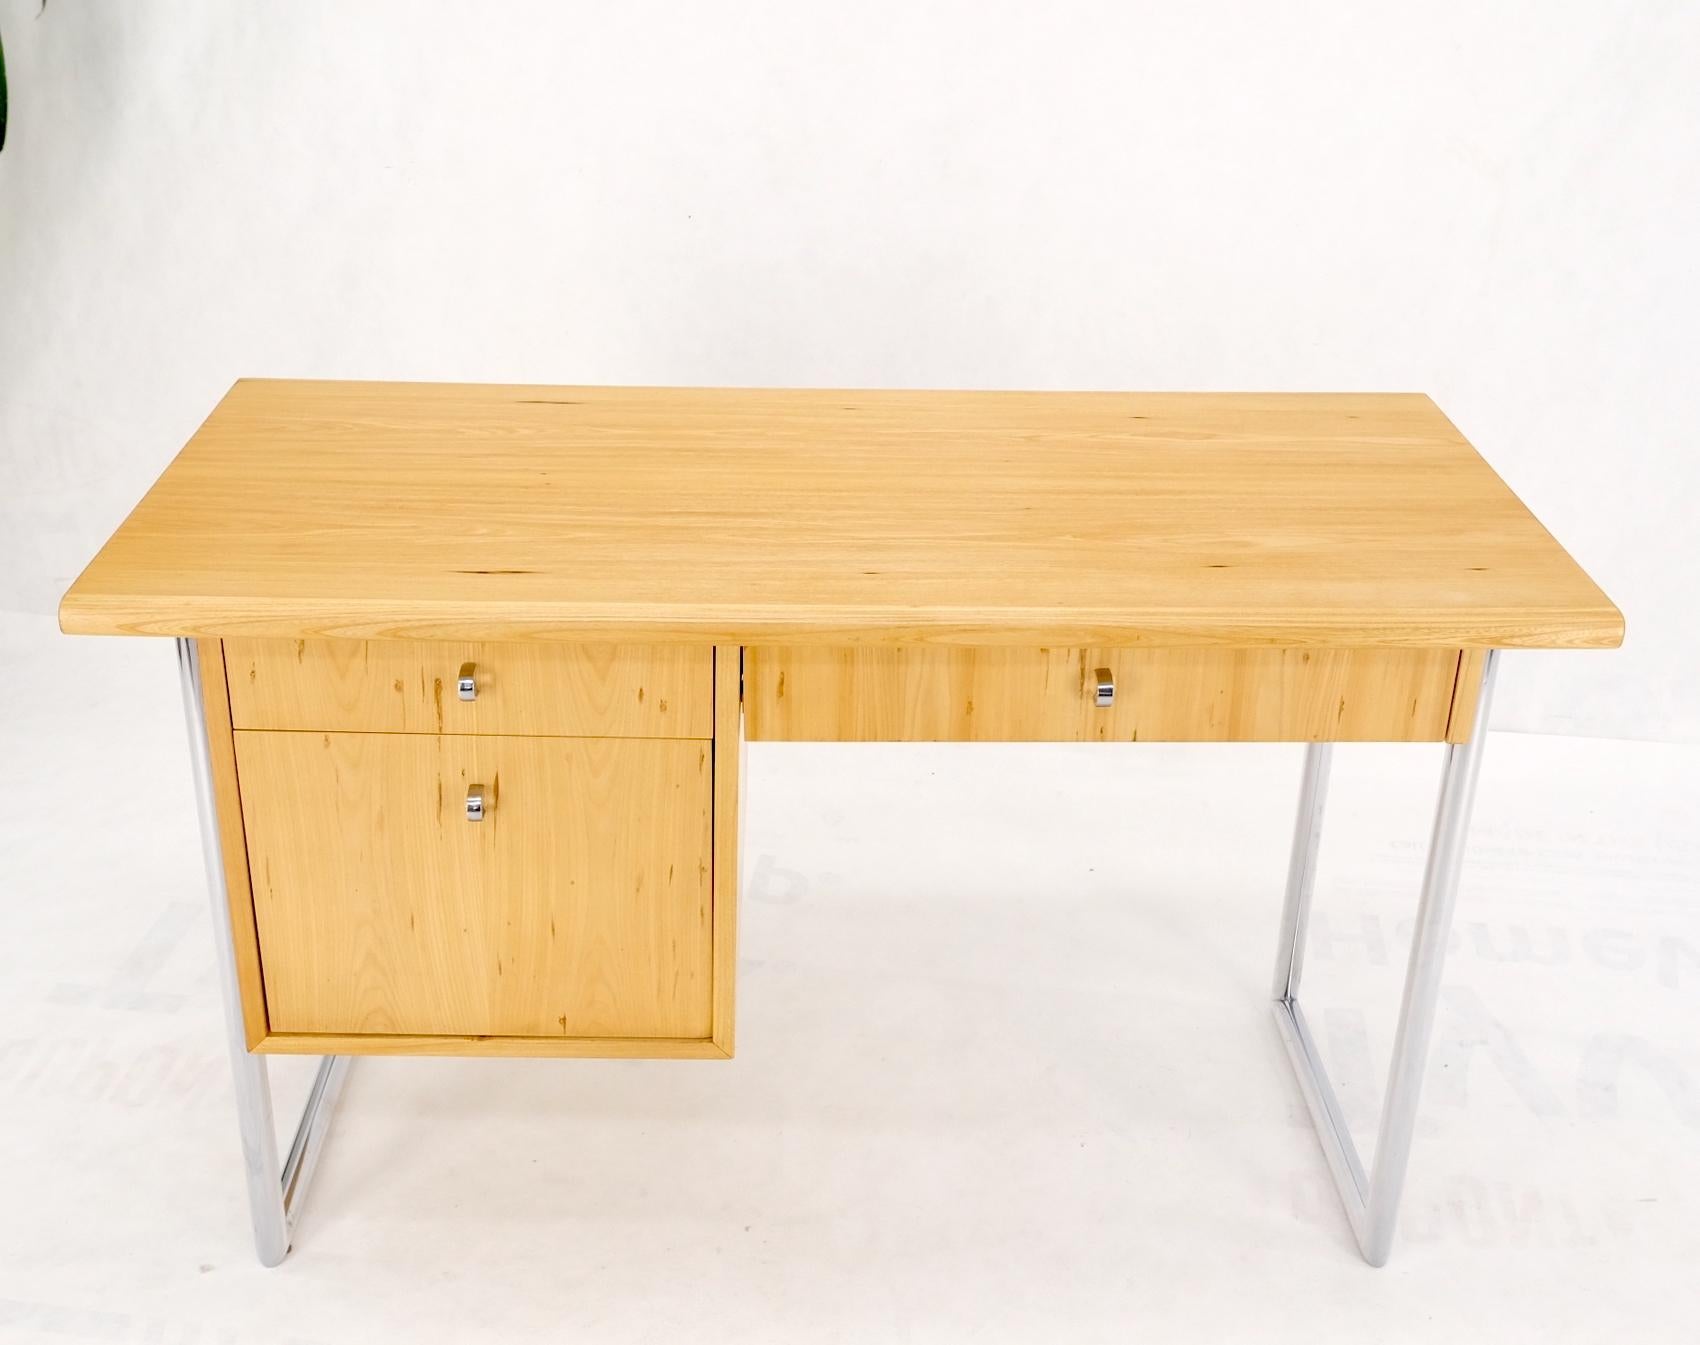 Founders light blonde pecan single pedestal desk tubular chrome legs MINT!
Solid wood construction dovetail joints.